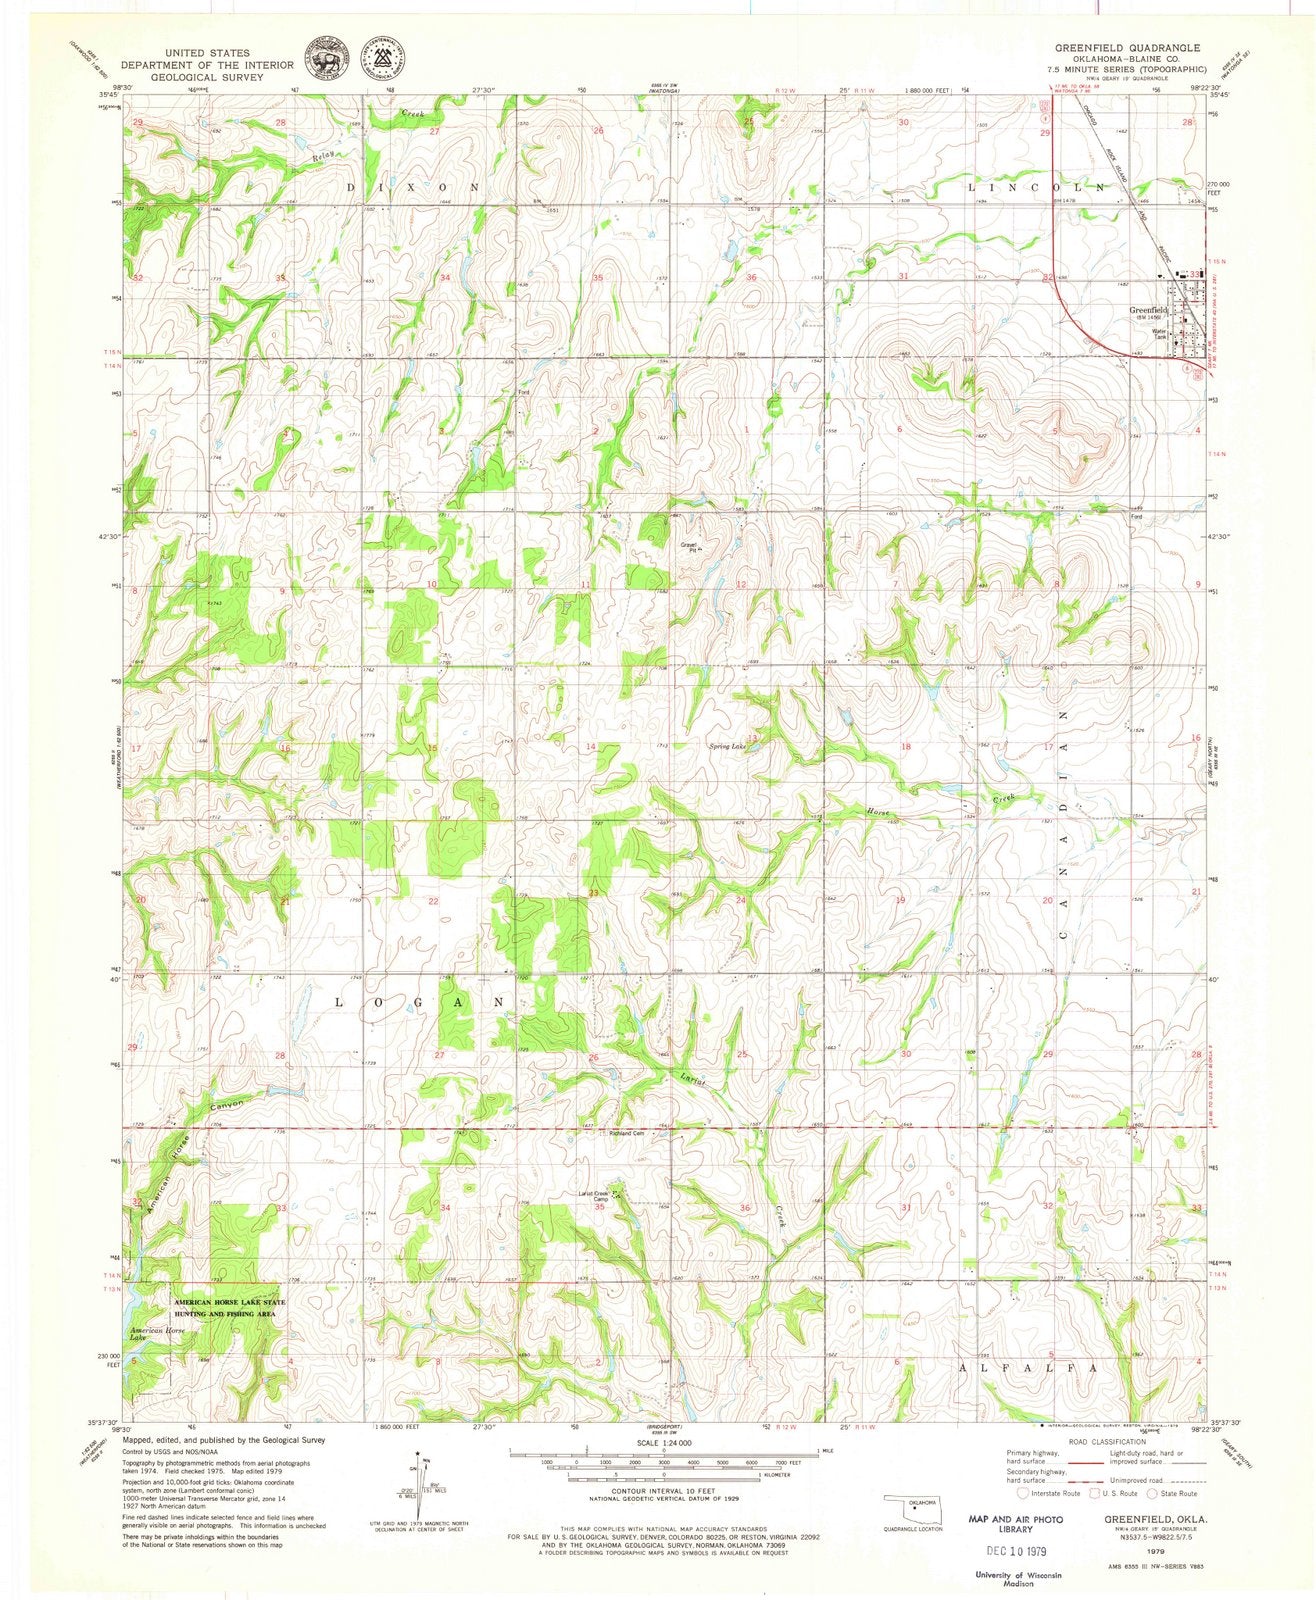 1979 Greenfield, OK - Oklahoma - USGS Topographic Map